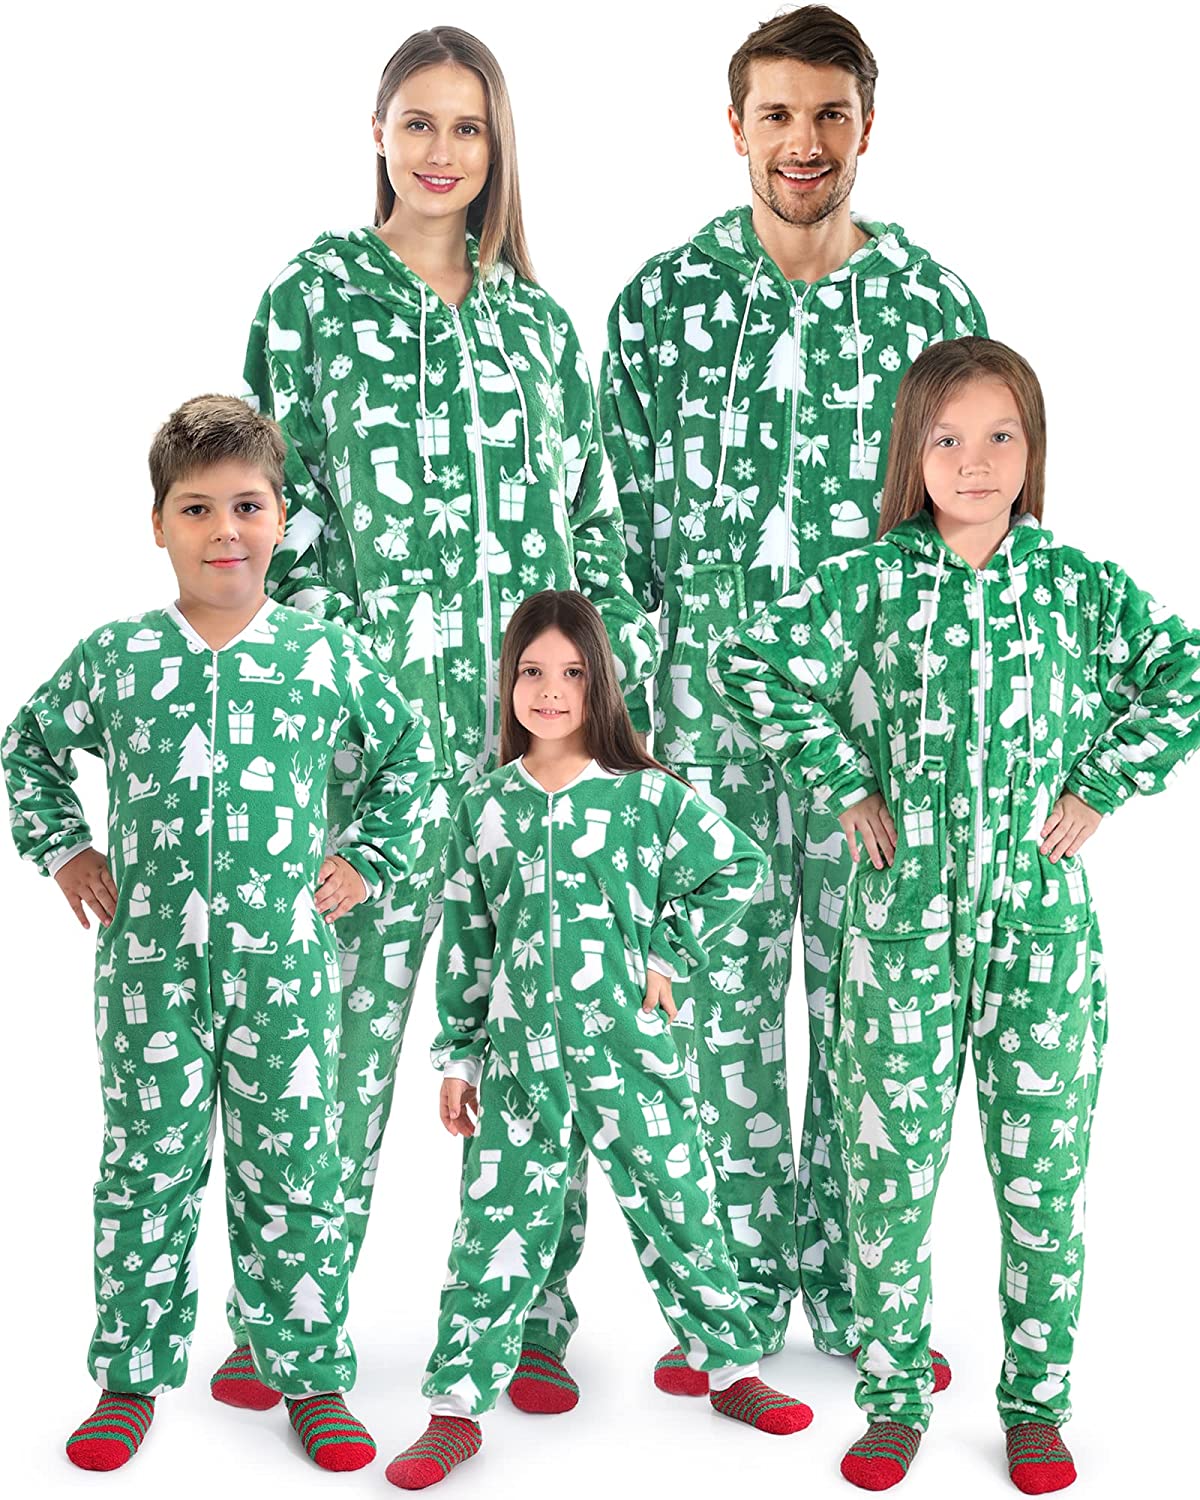 Green Matching Christmas Pajamas Set Sleepwear Soft Fleece Reindeer Printed Onesie For Kids and Adults